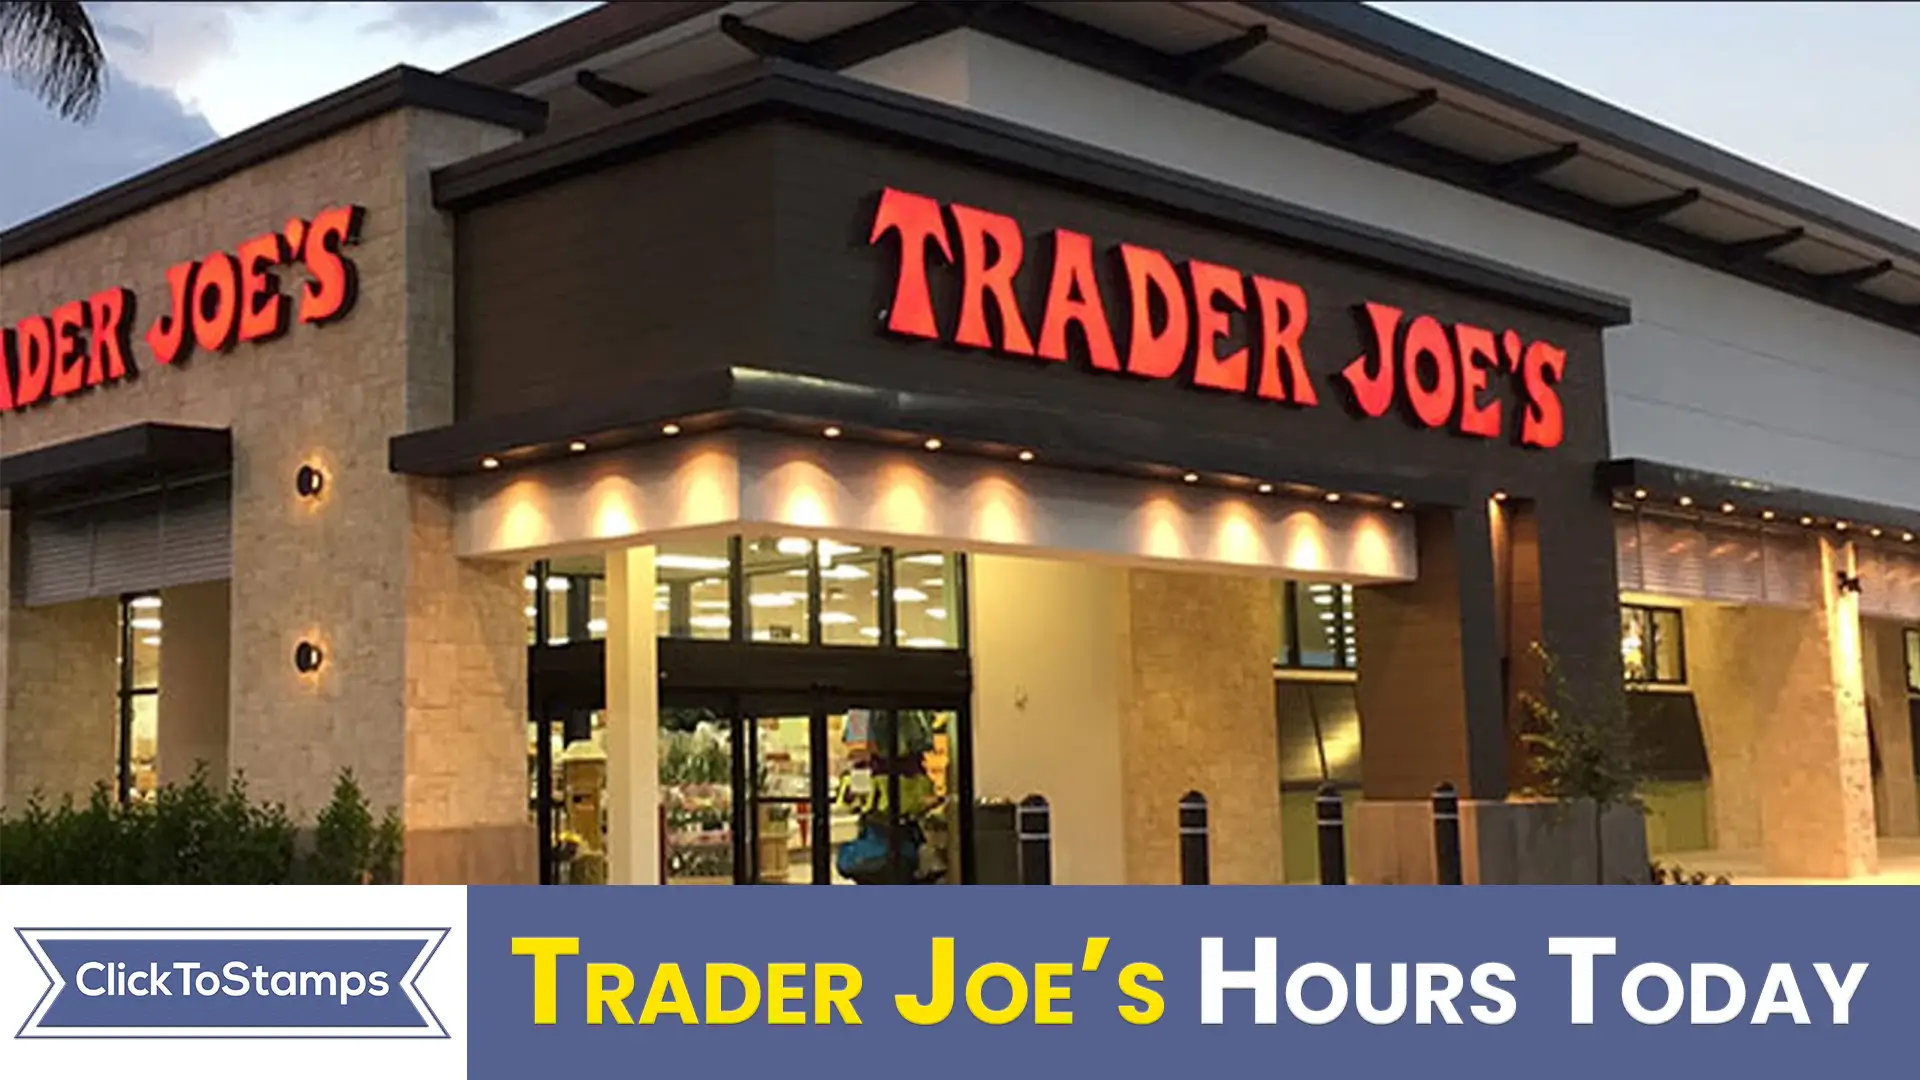 Trader Joe’s Hours